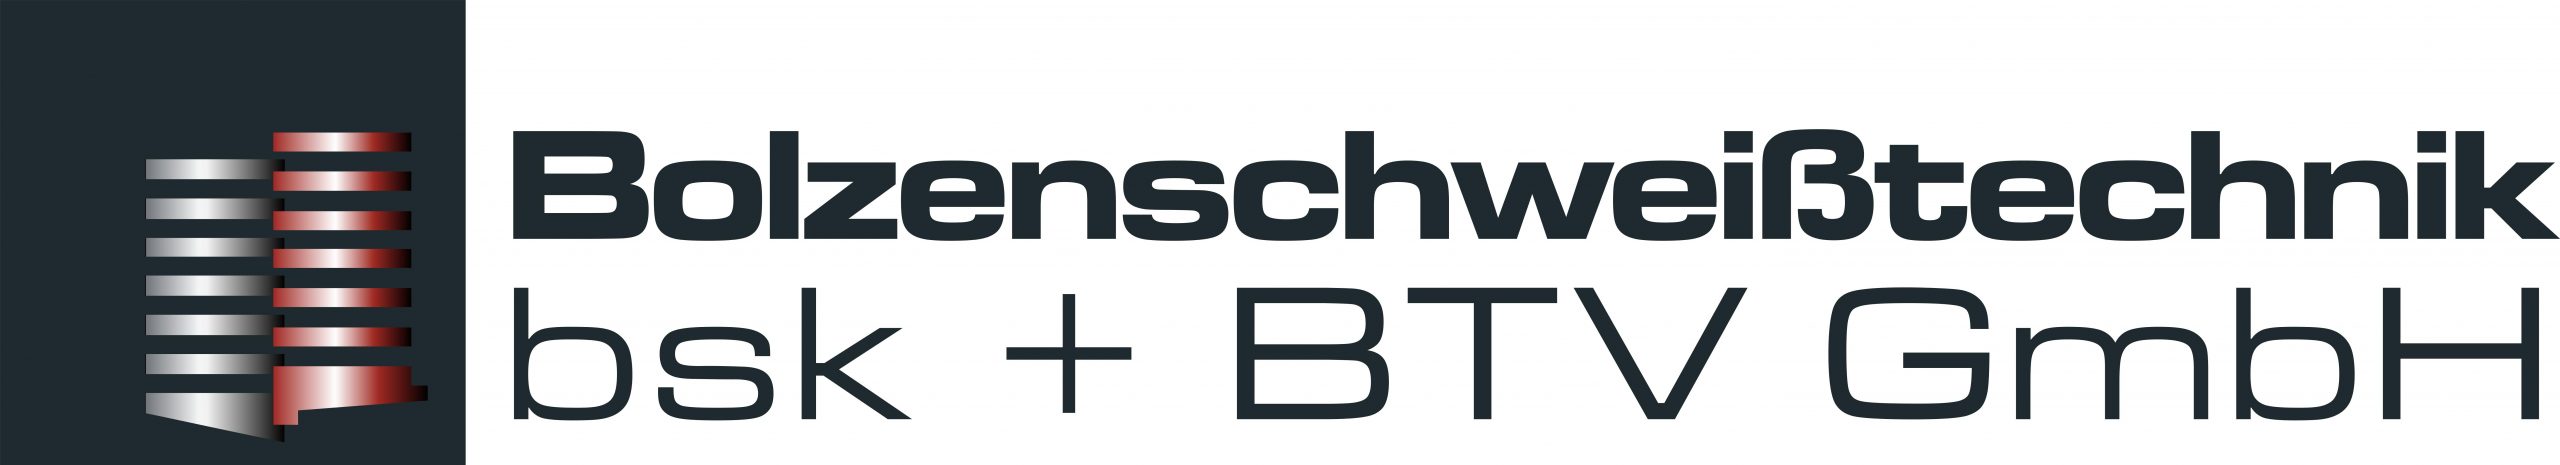 Bolzenschweißtechnik BSK + BTV GmbH